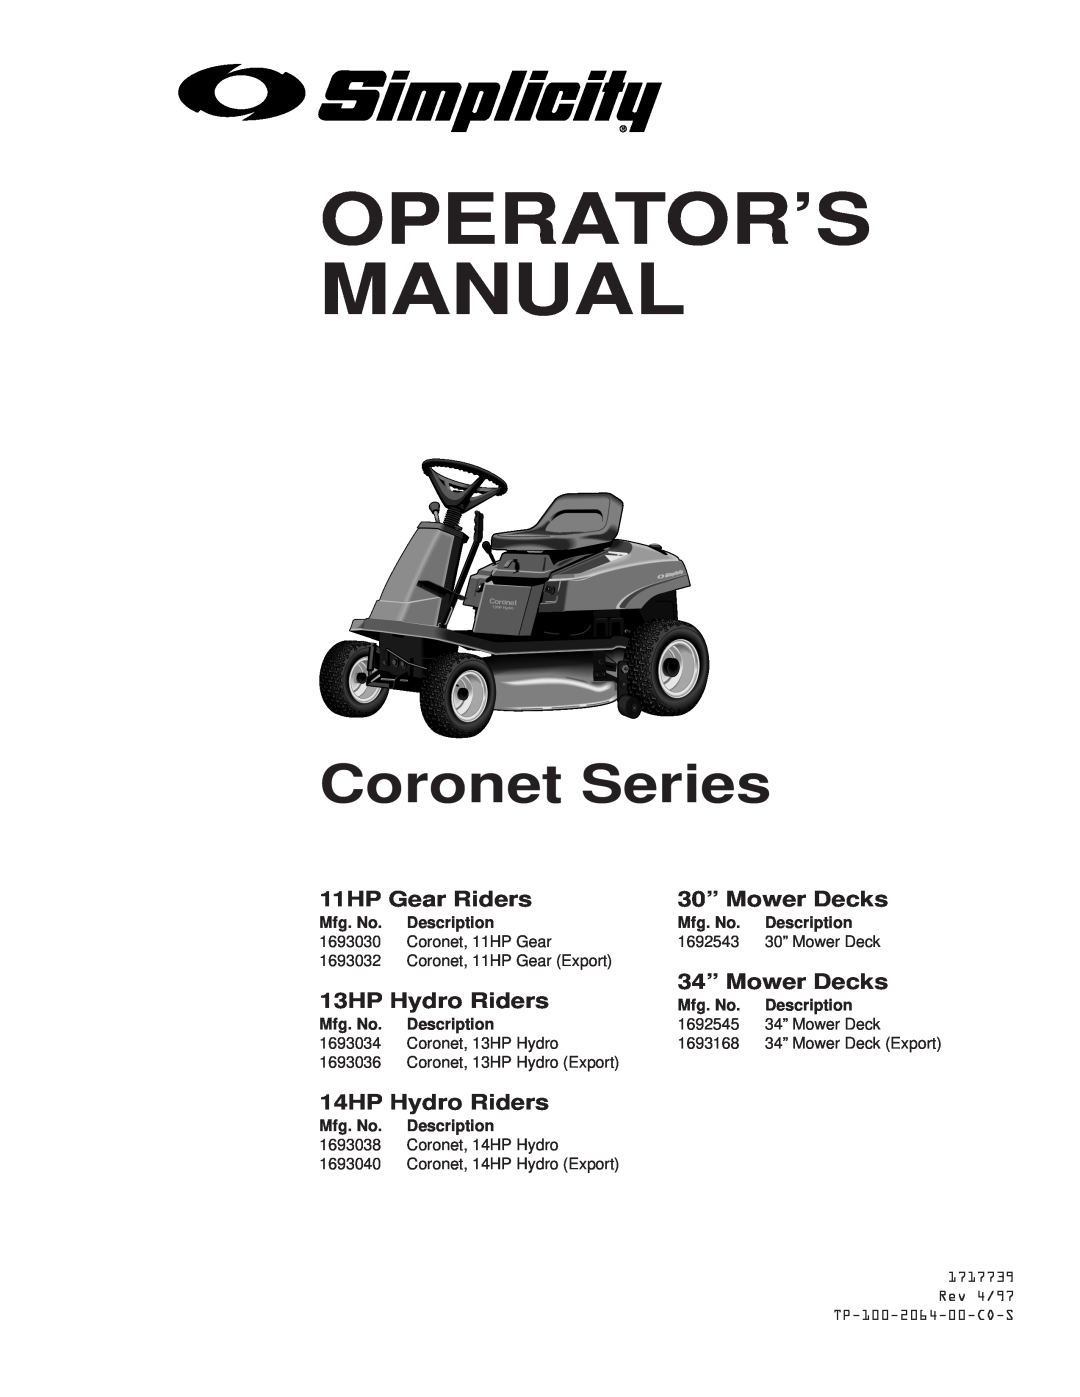 Simplicity 14HP manual Operator’S Manual, Coronet Series, 11HP Gear Riders, 30” Mower Decks, 34” Mower Decks 